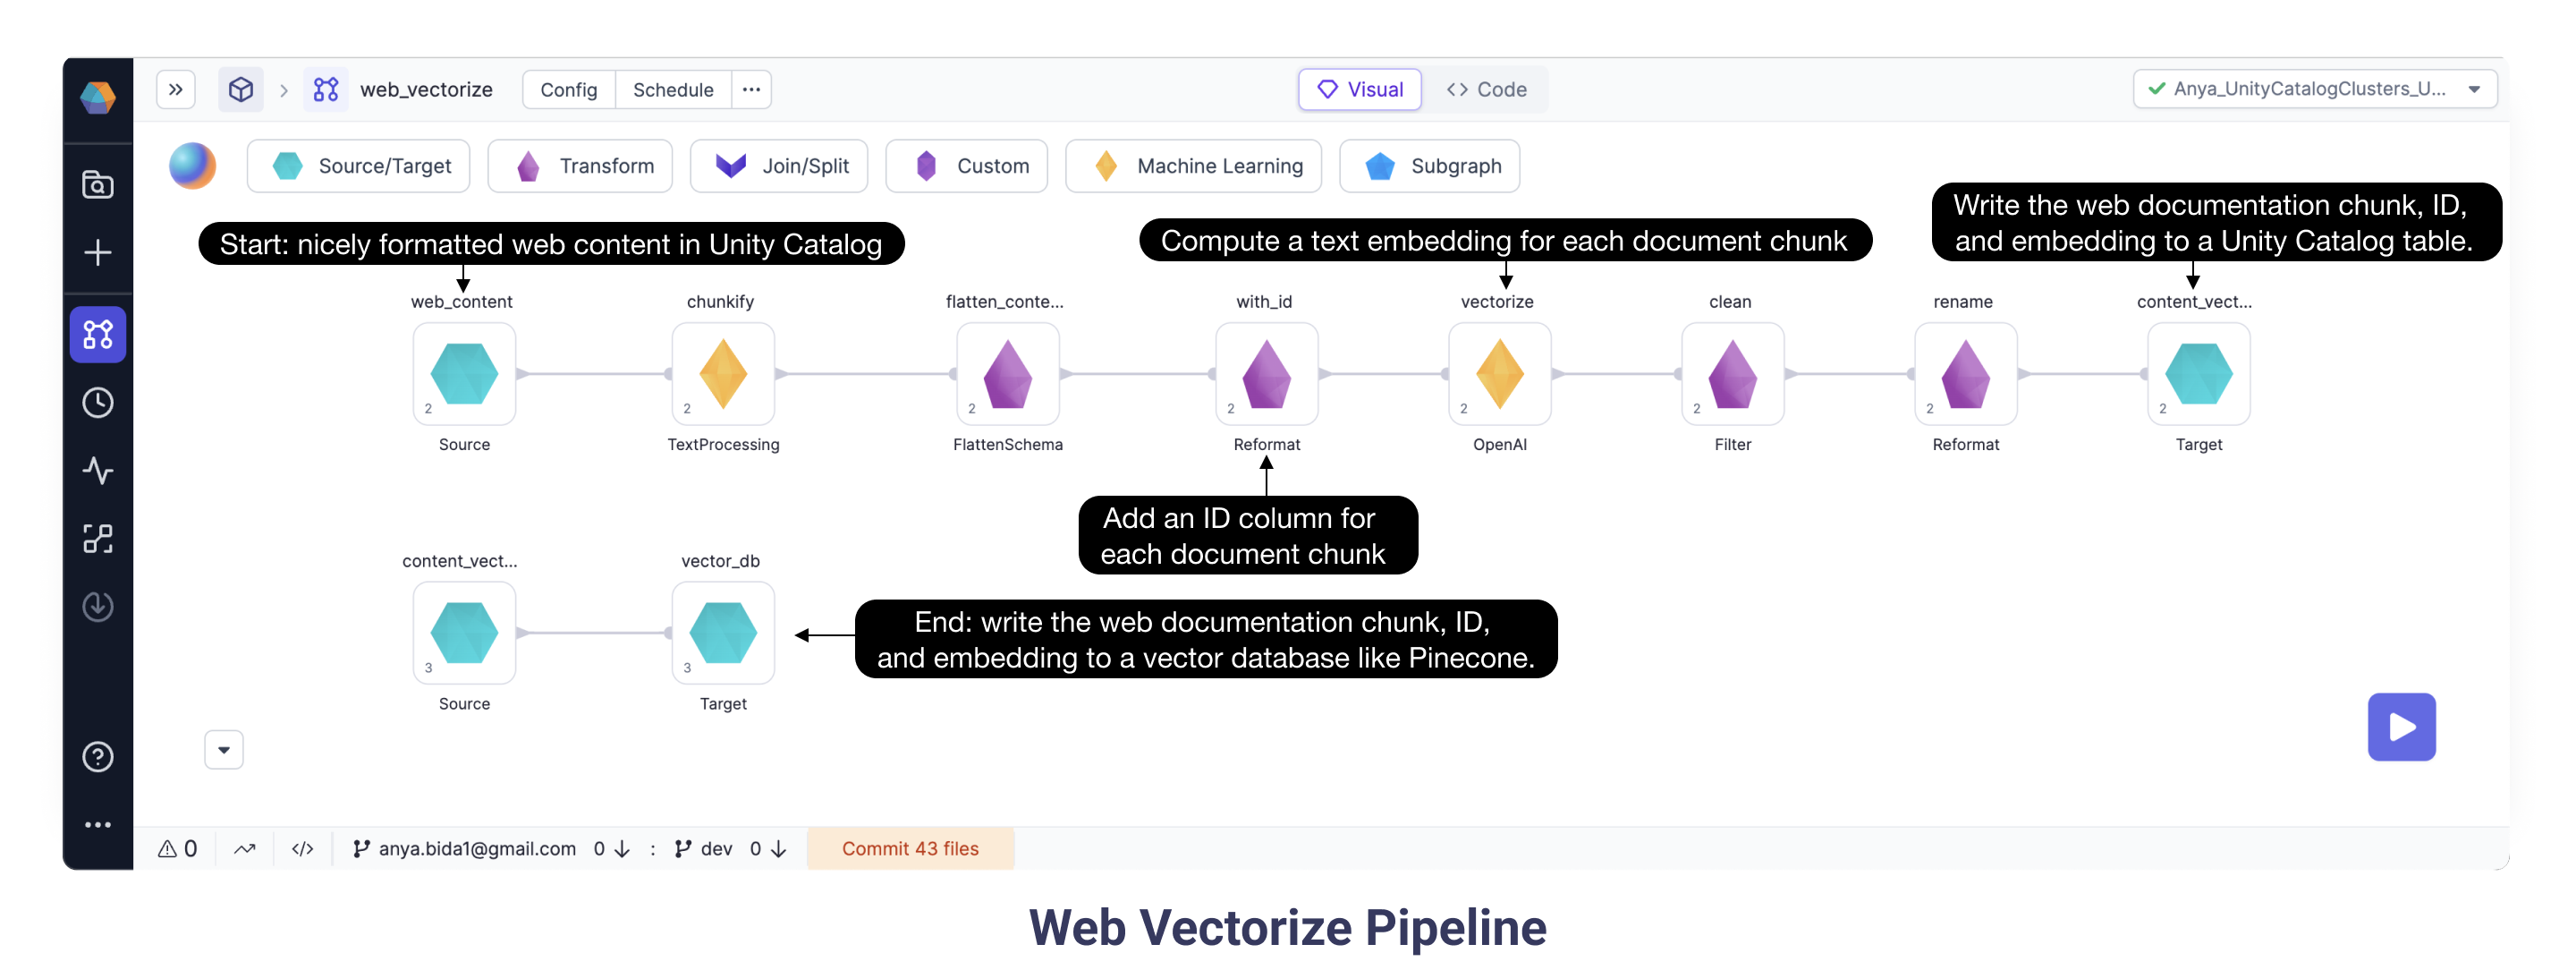 Web Vectorize Pipeline